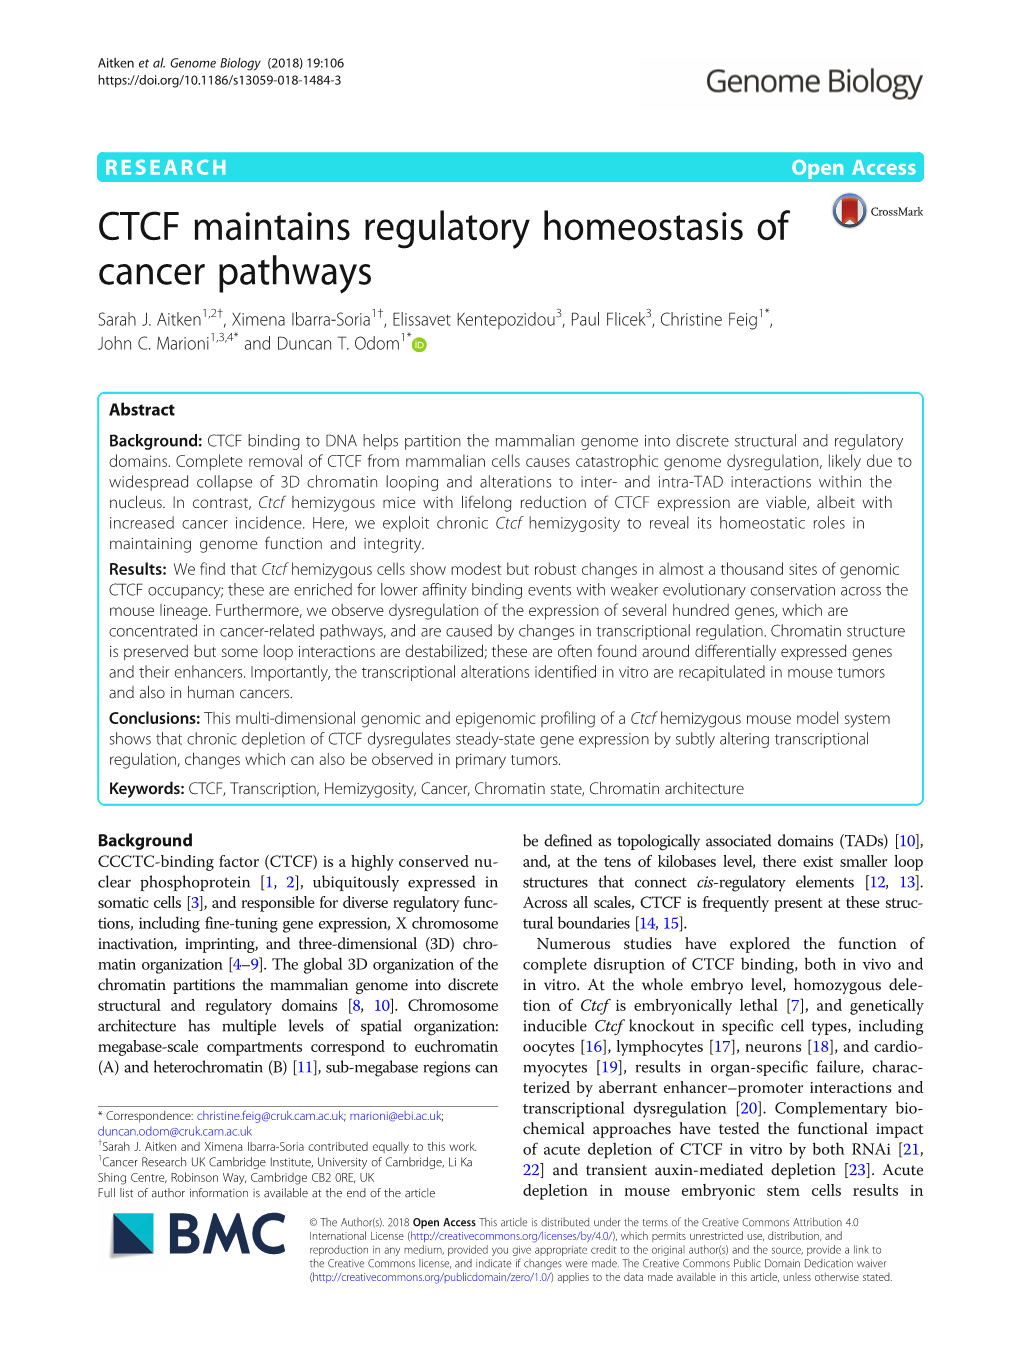 CTCF Maintains Regulatory Homeostasis of Cancer Pathways Sarah J